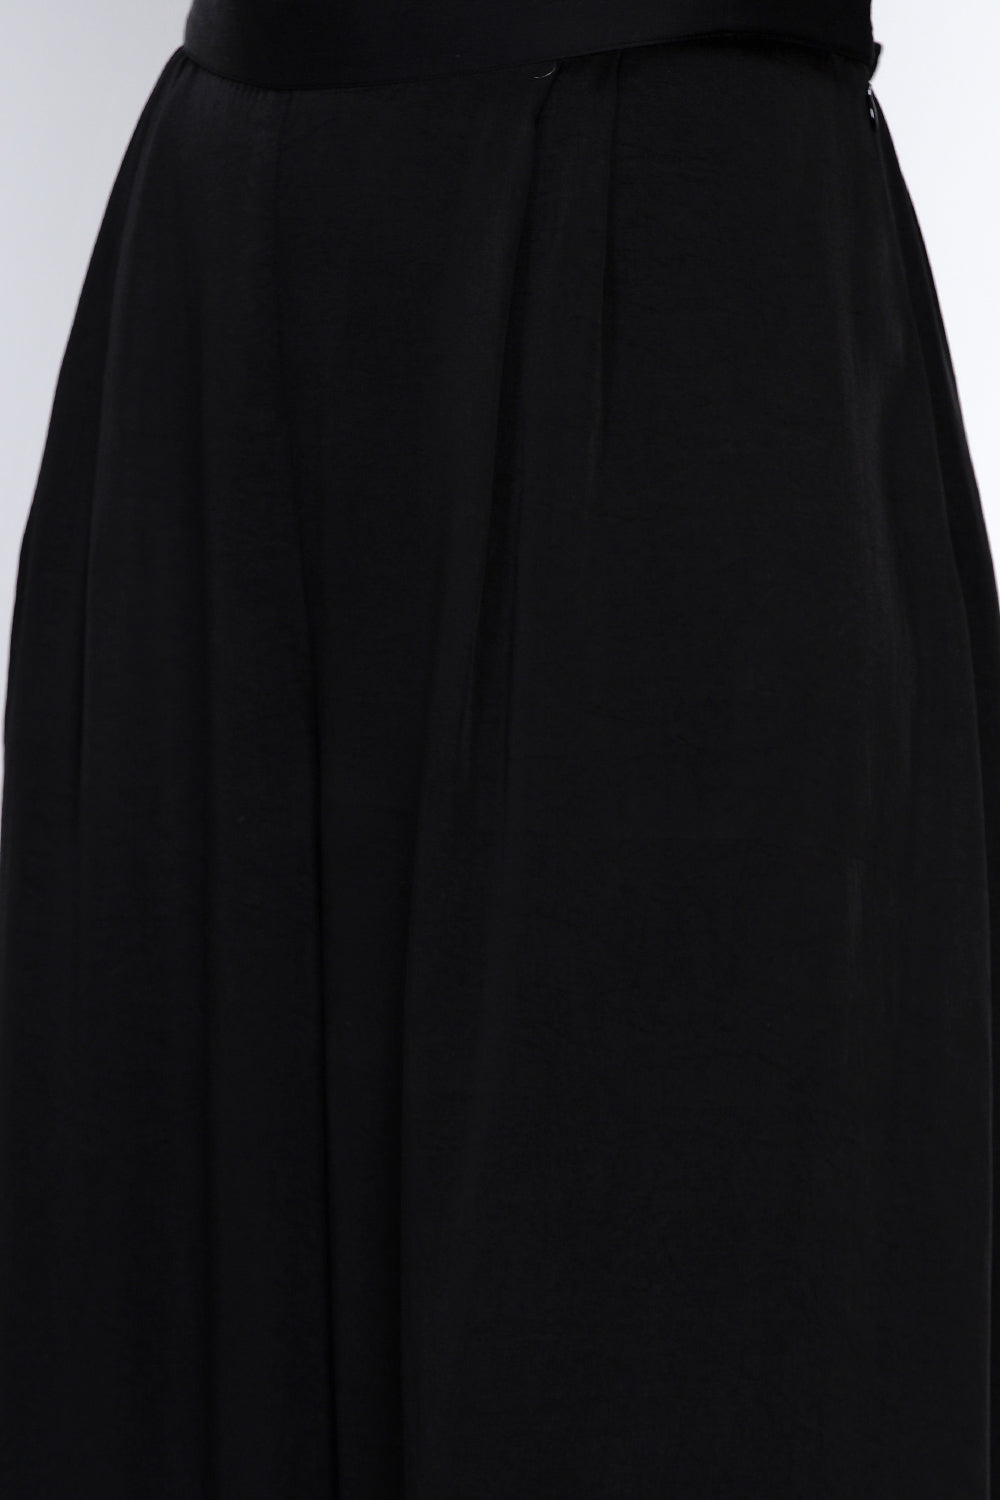 Black Silk Skirt Pants